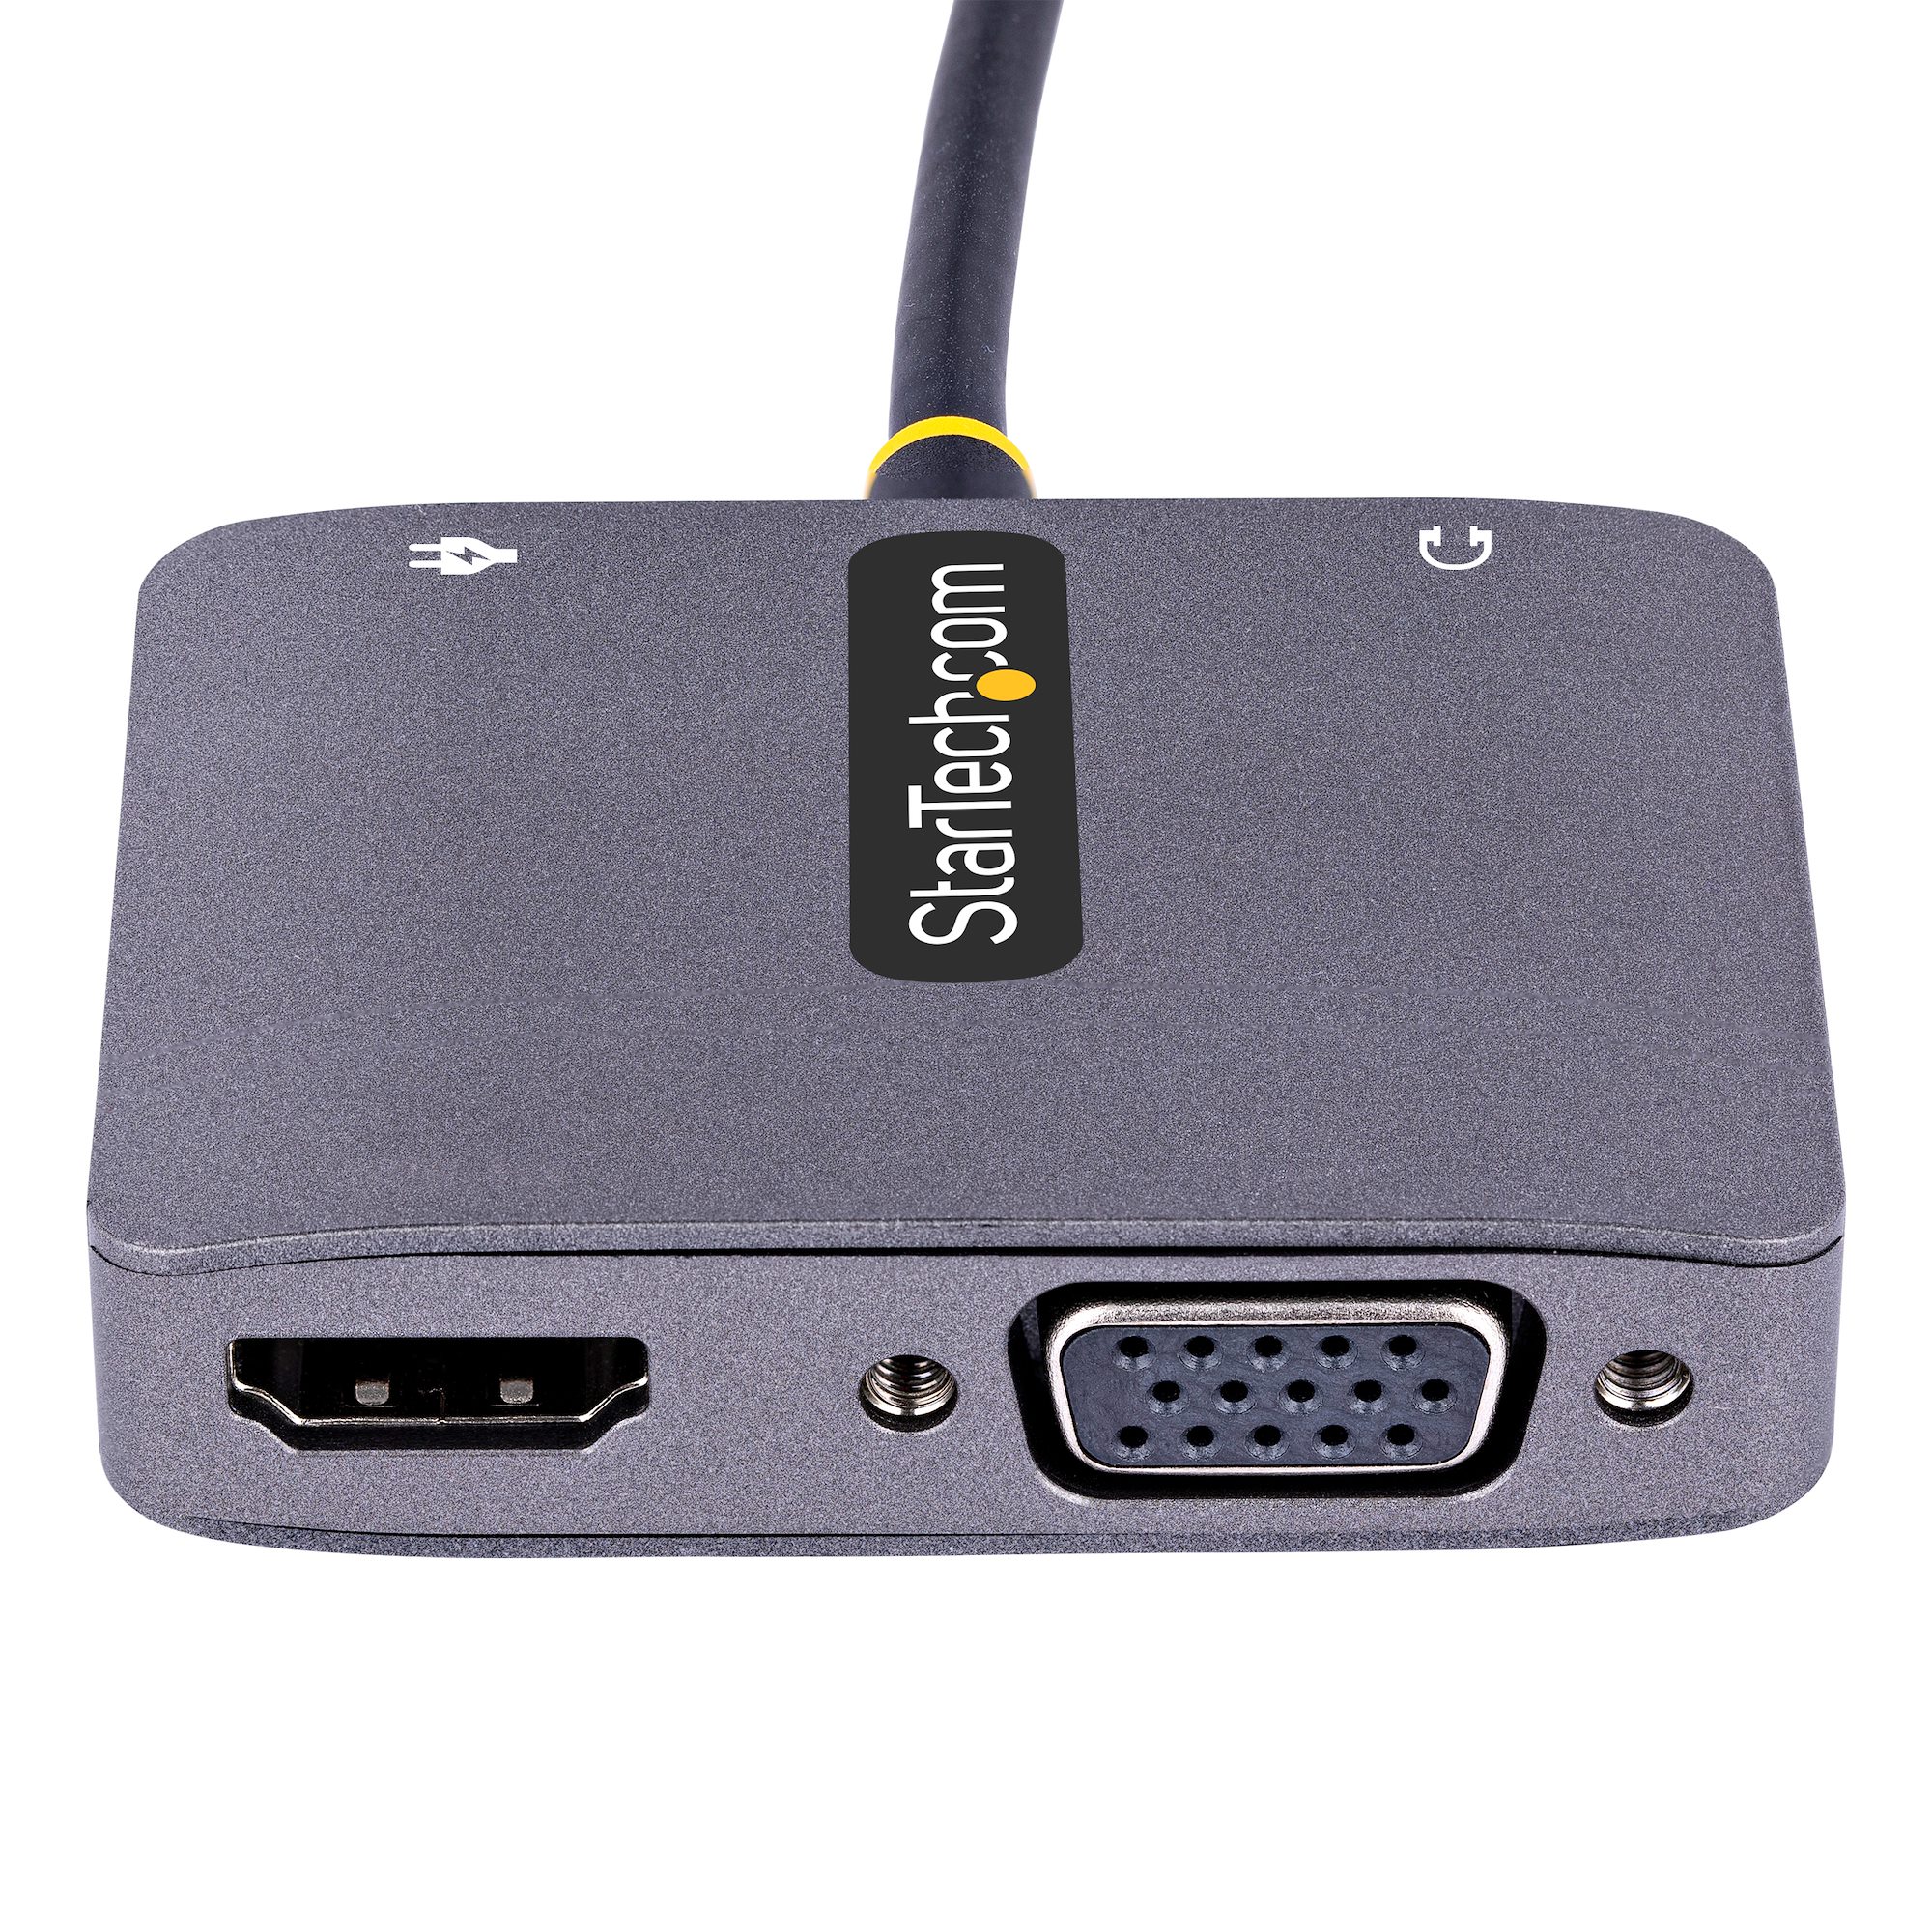 VGA to HDMI Adapter with VGA Pass-thru